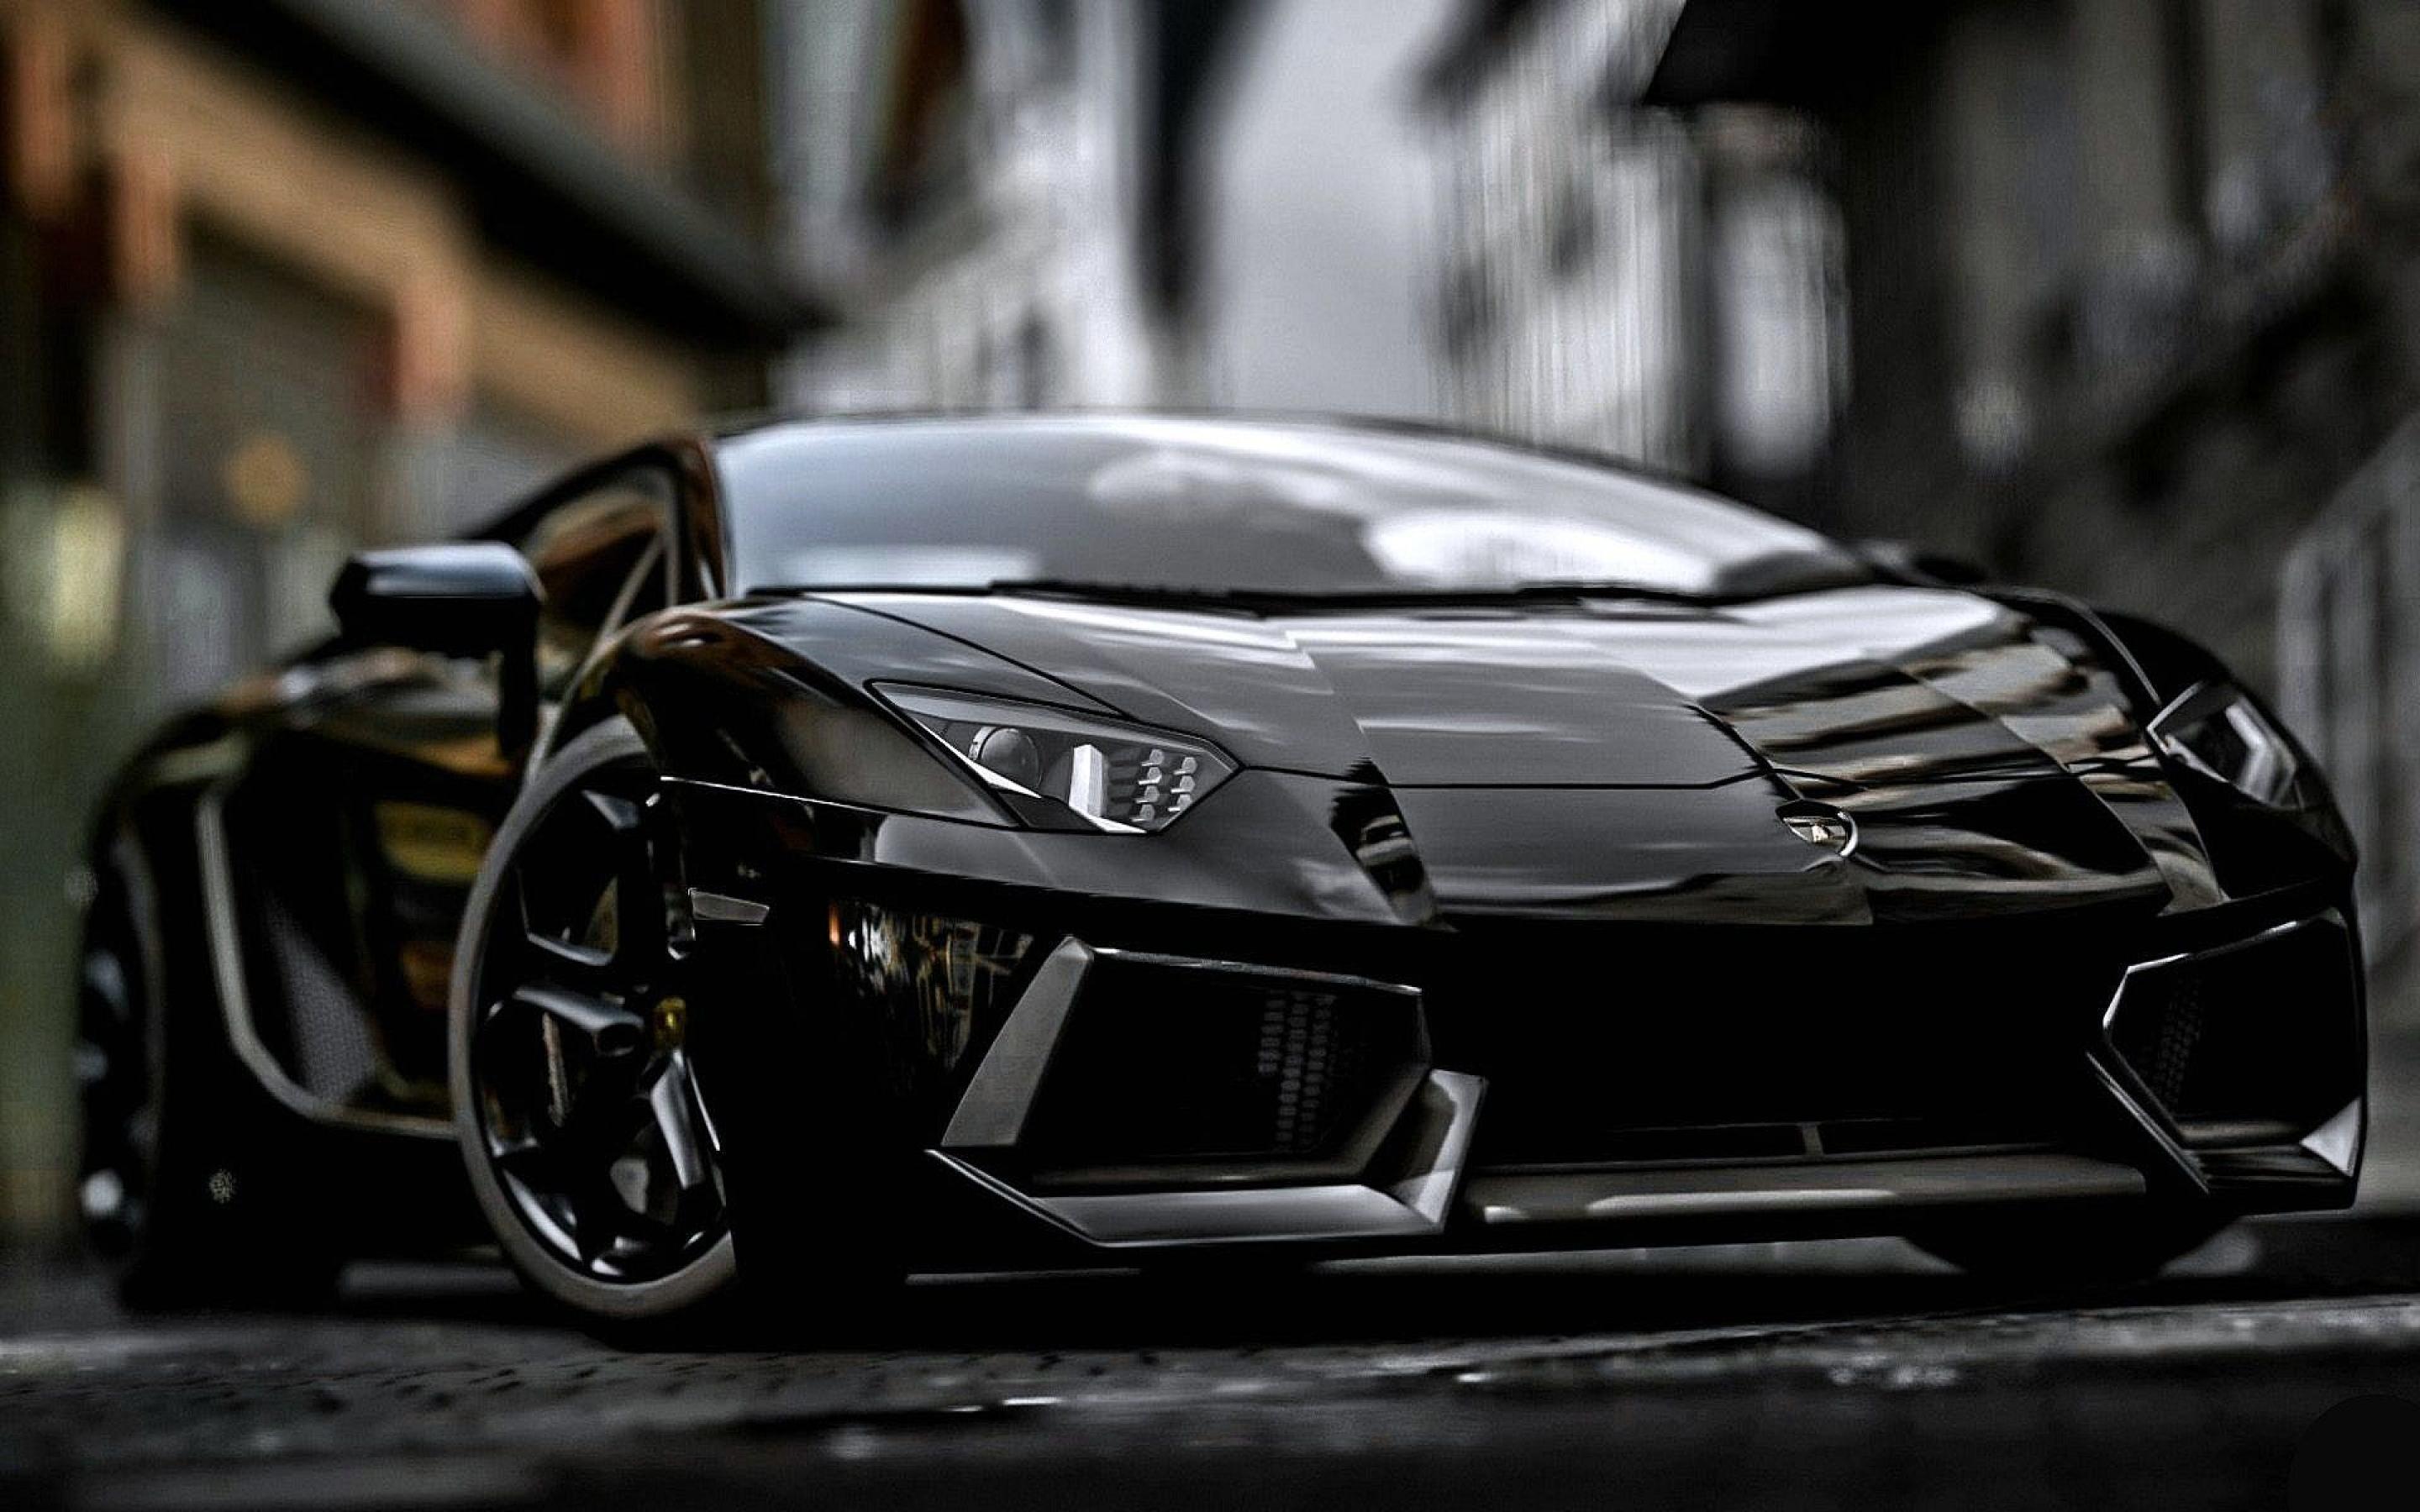 Shiny Black Lamborghini Aventador by ROGUE-RATTLESNAKE on DeviantArt